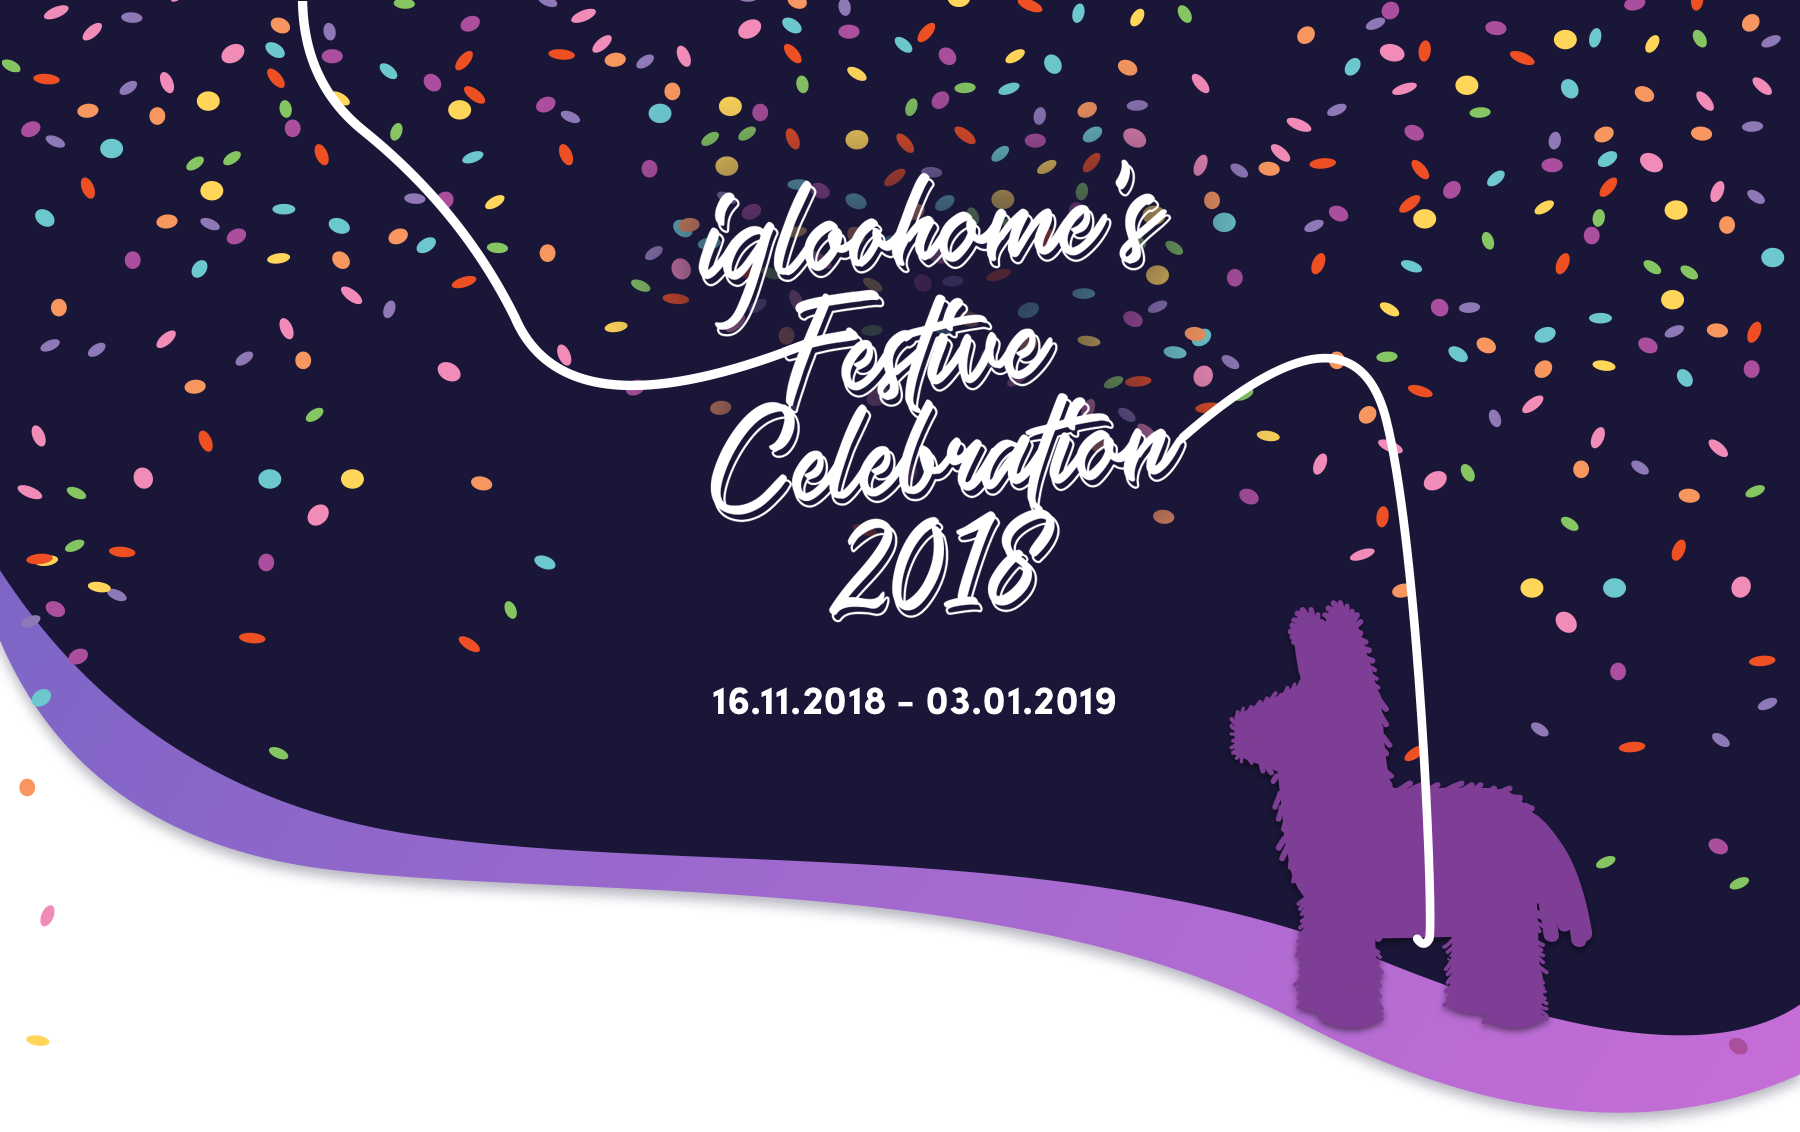 igloohome Festive Celebration 2018